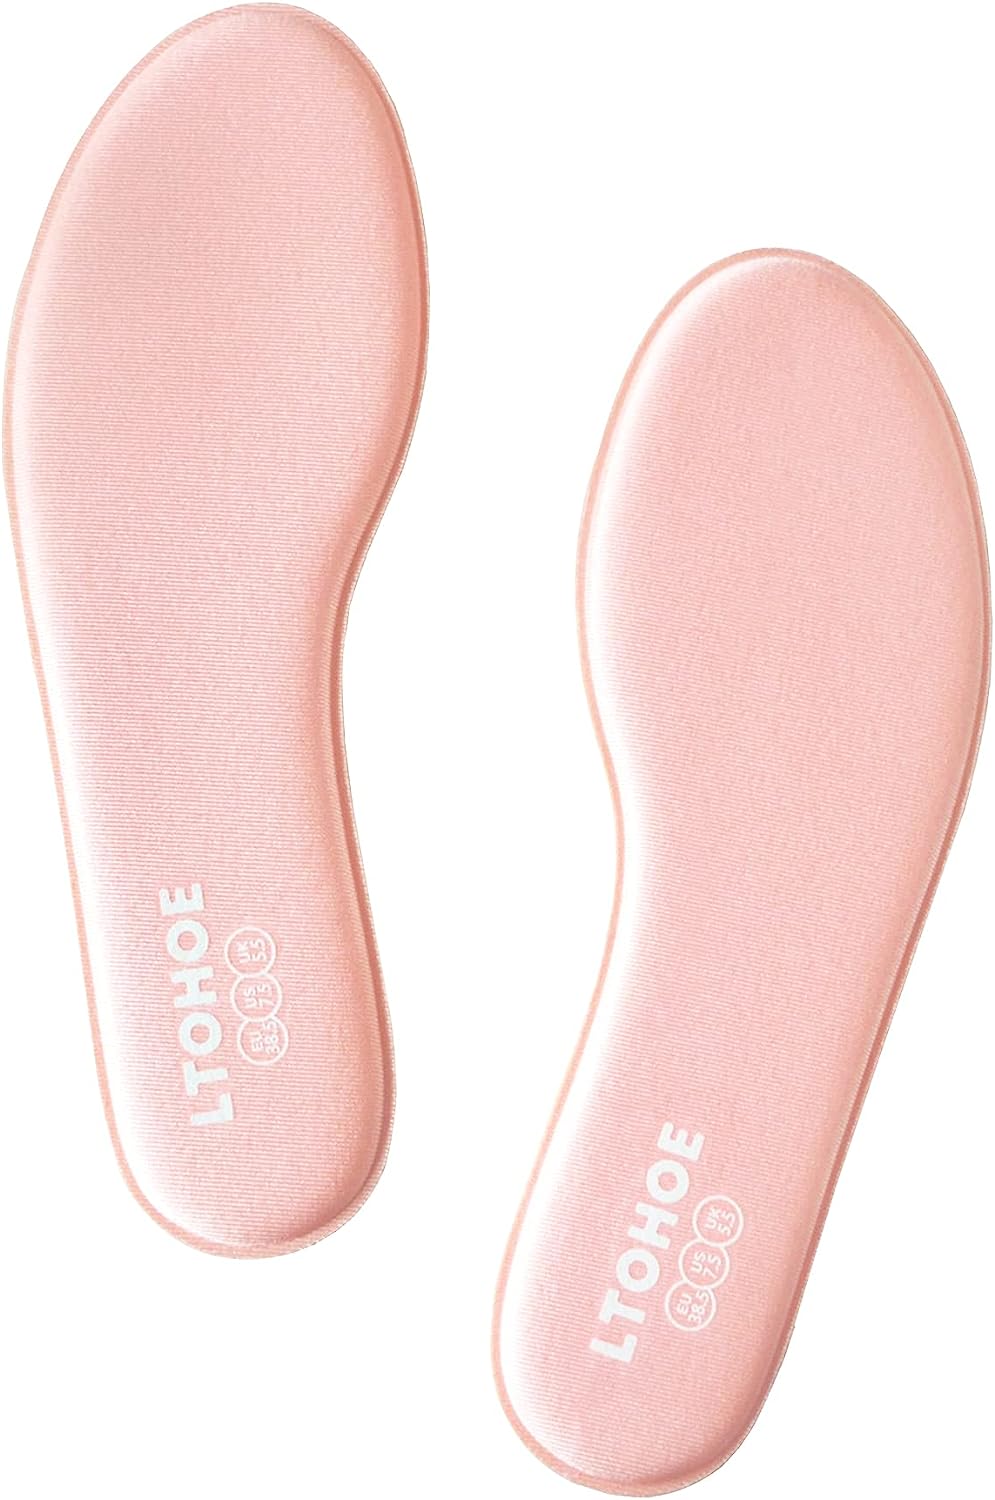 LTOHOE Memory Foam Insoles for Women, Replacement Shoe [...]